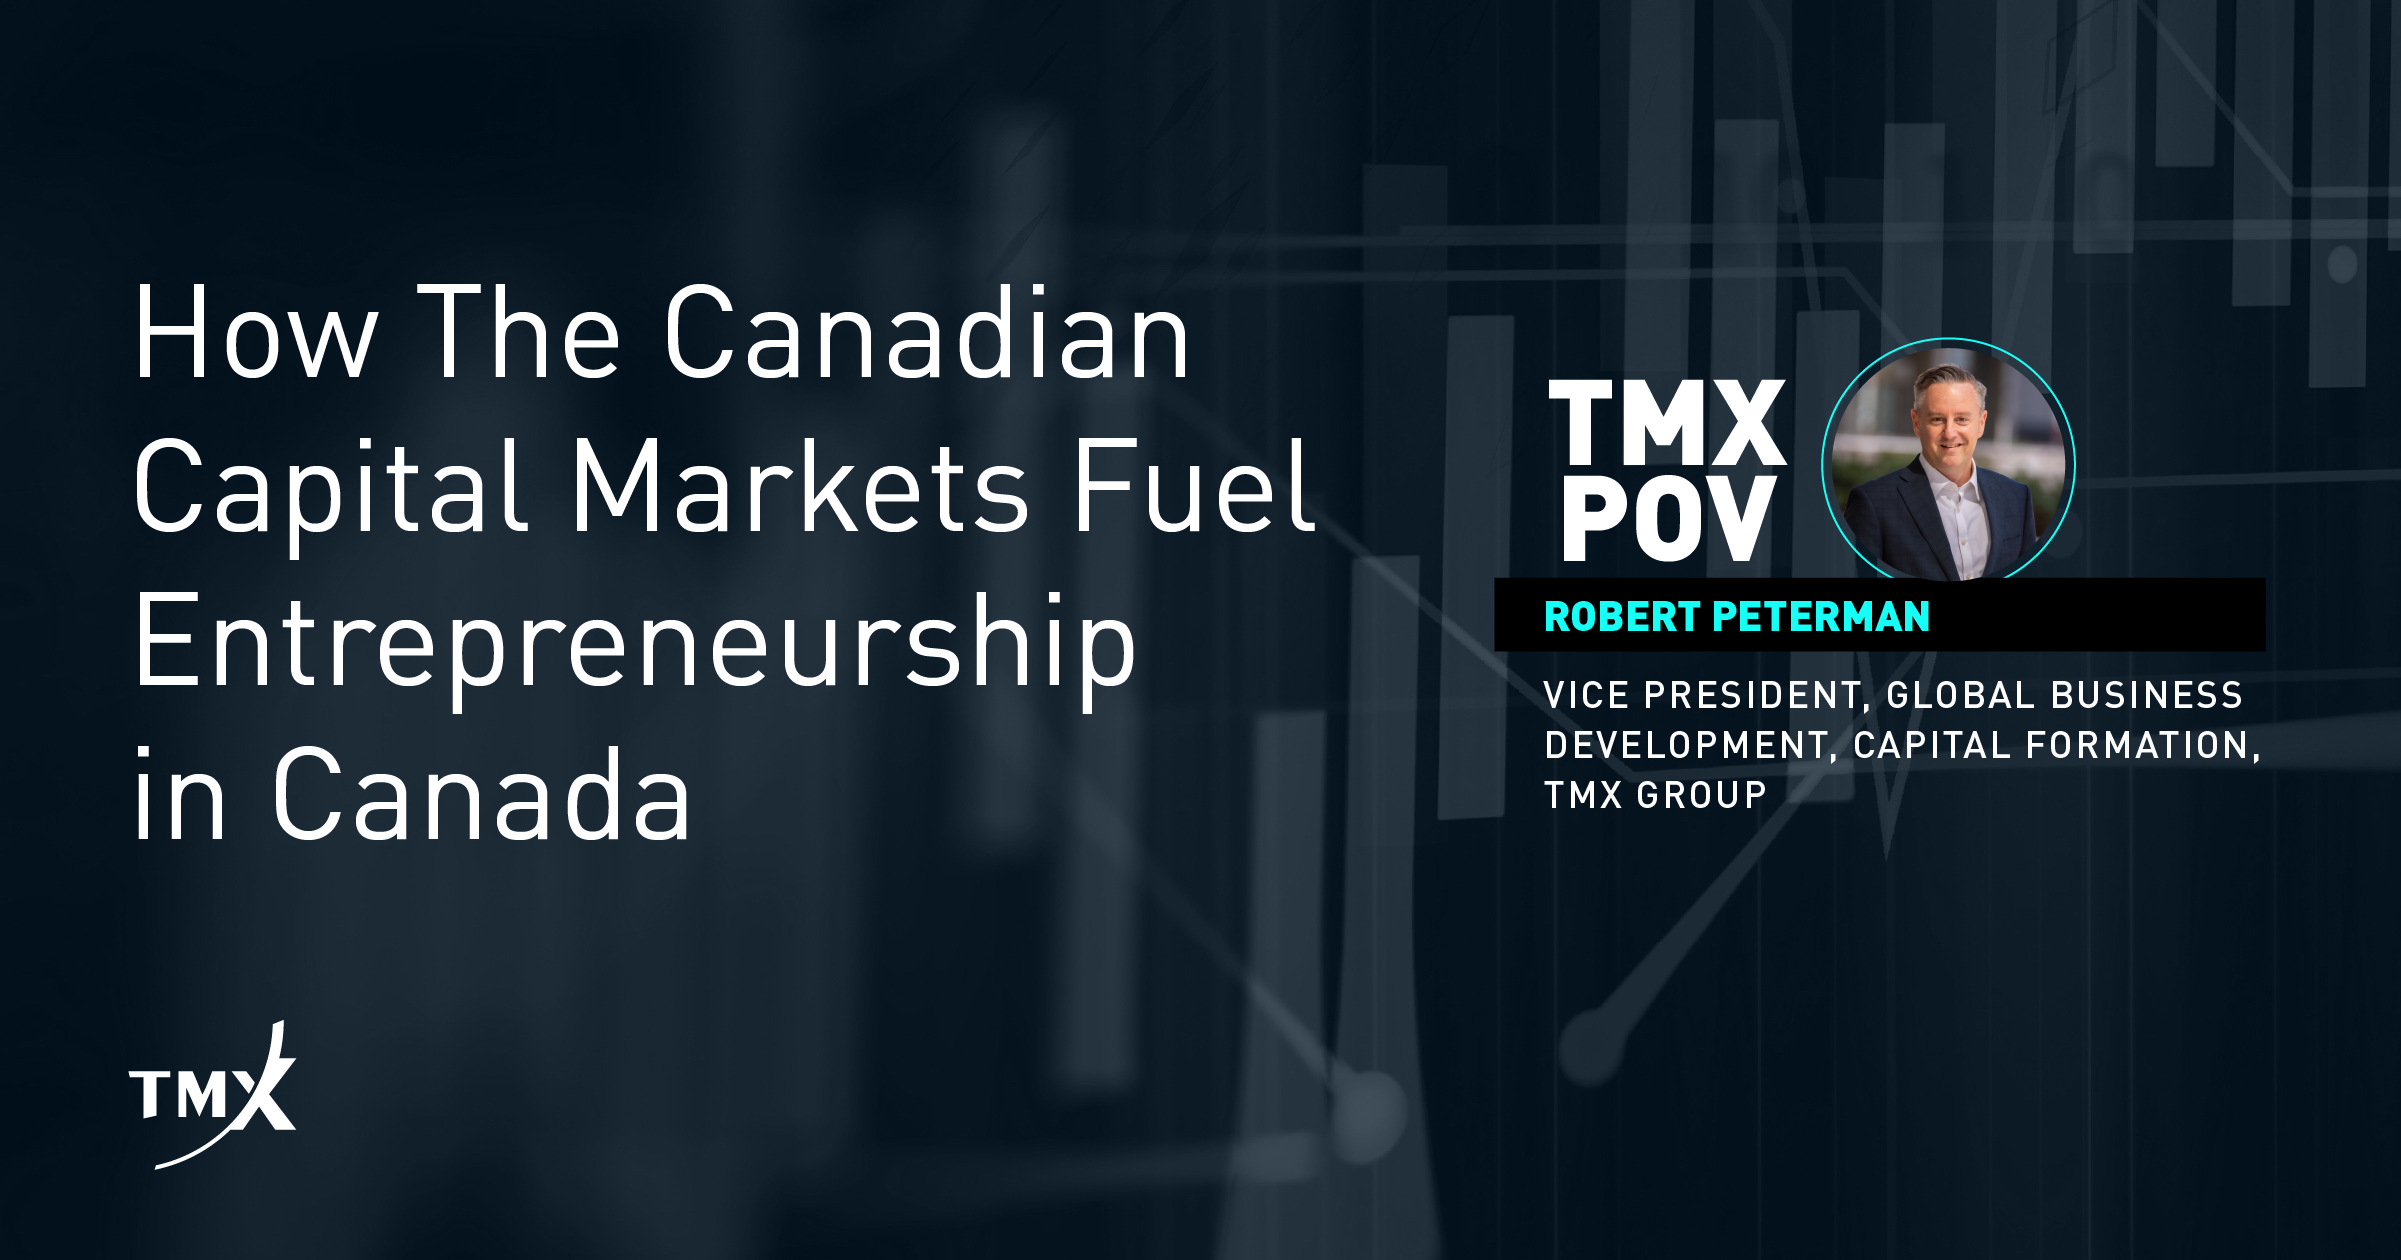 TMX POV - How The Canadian Capital Markets Fuel Entrepreneurship in Canada